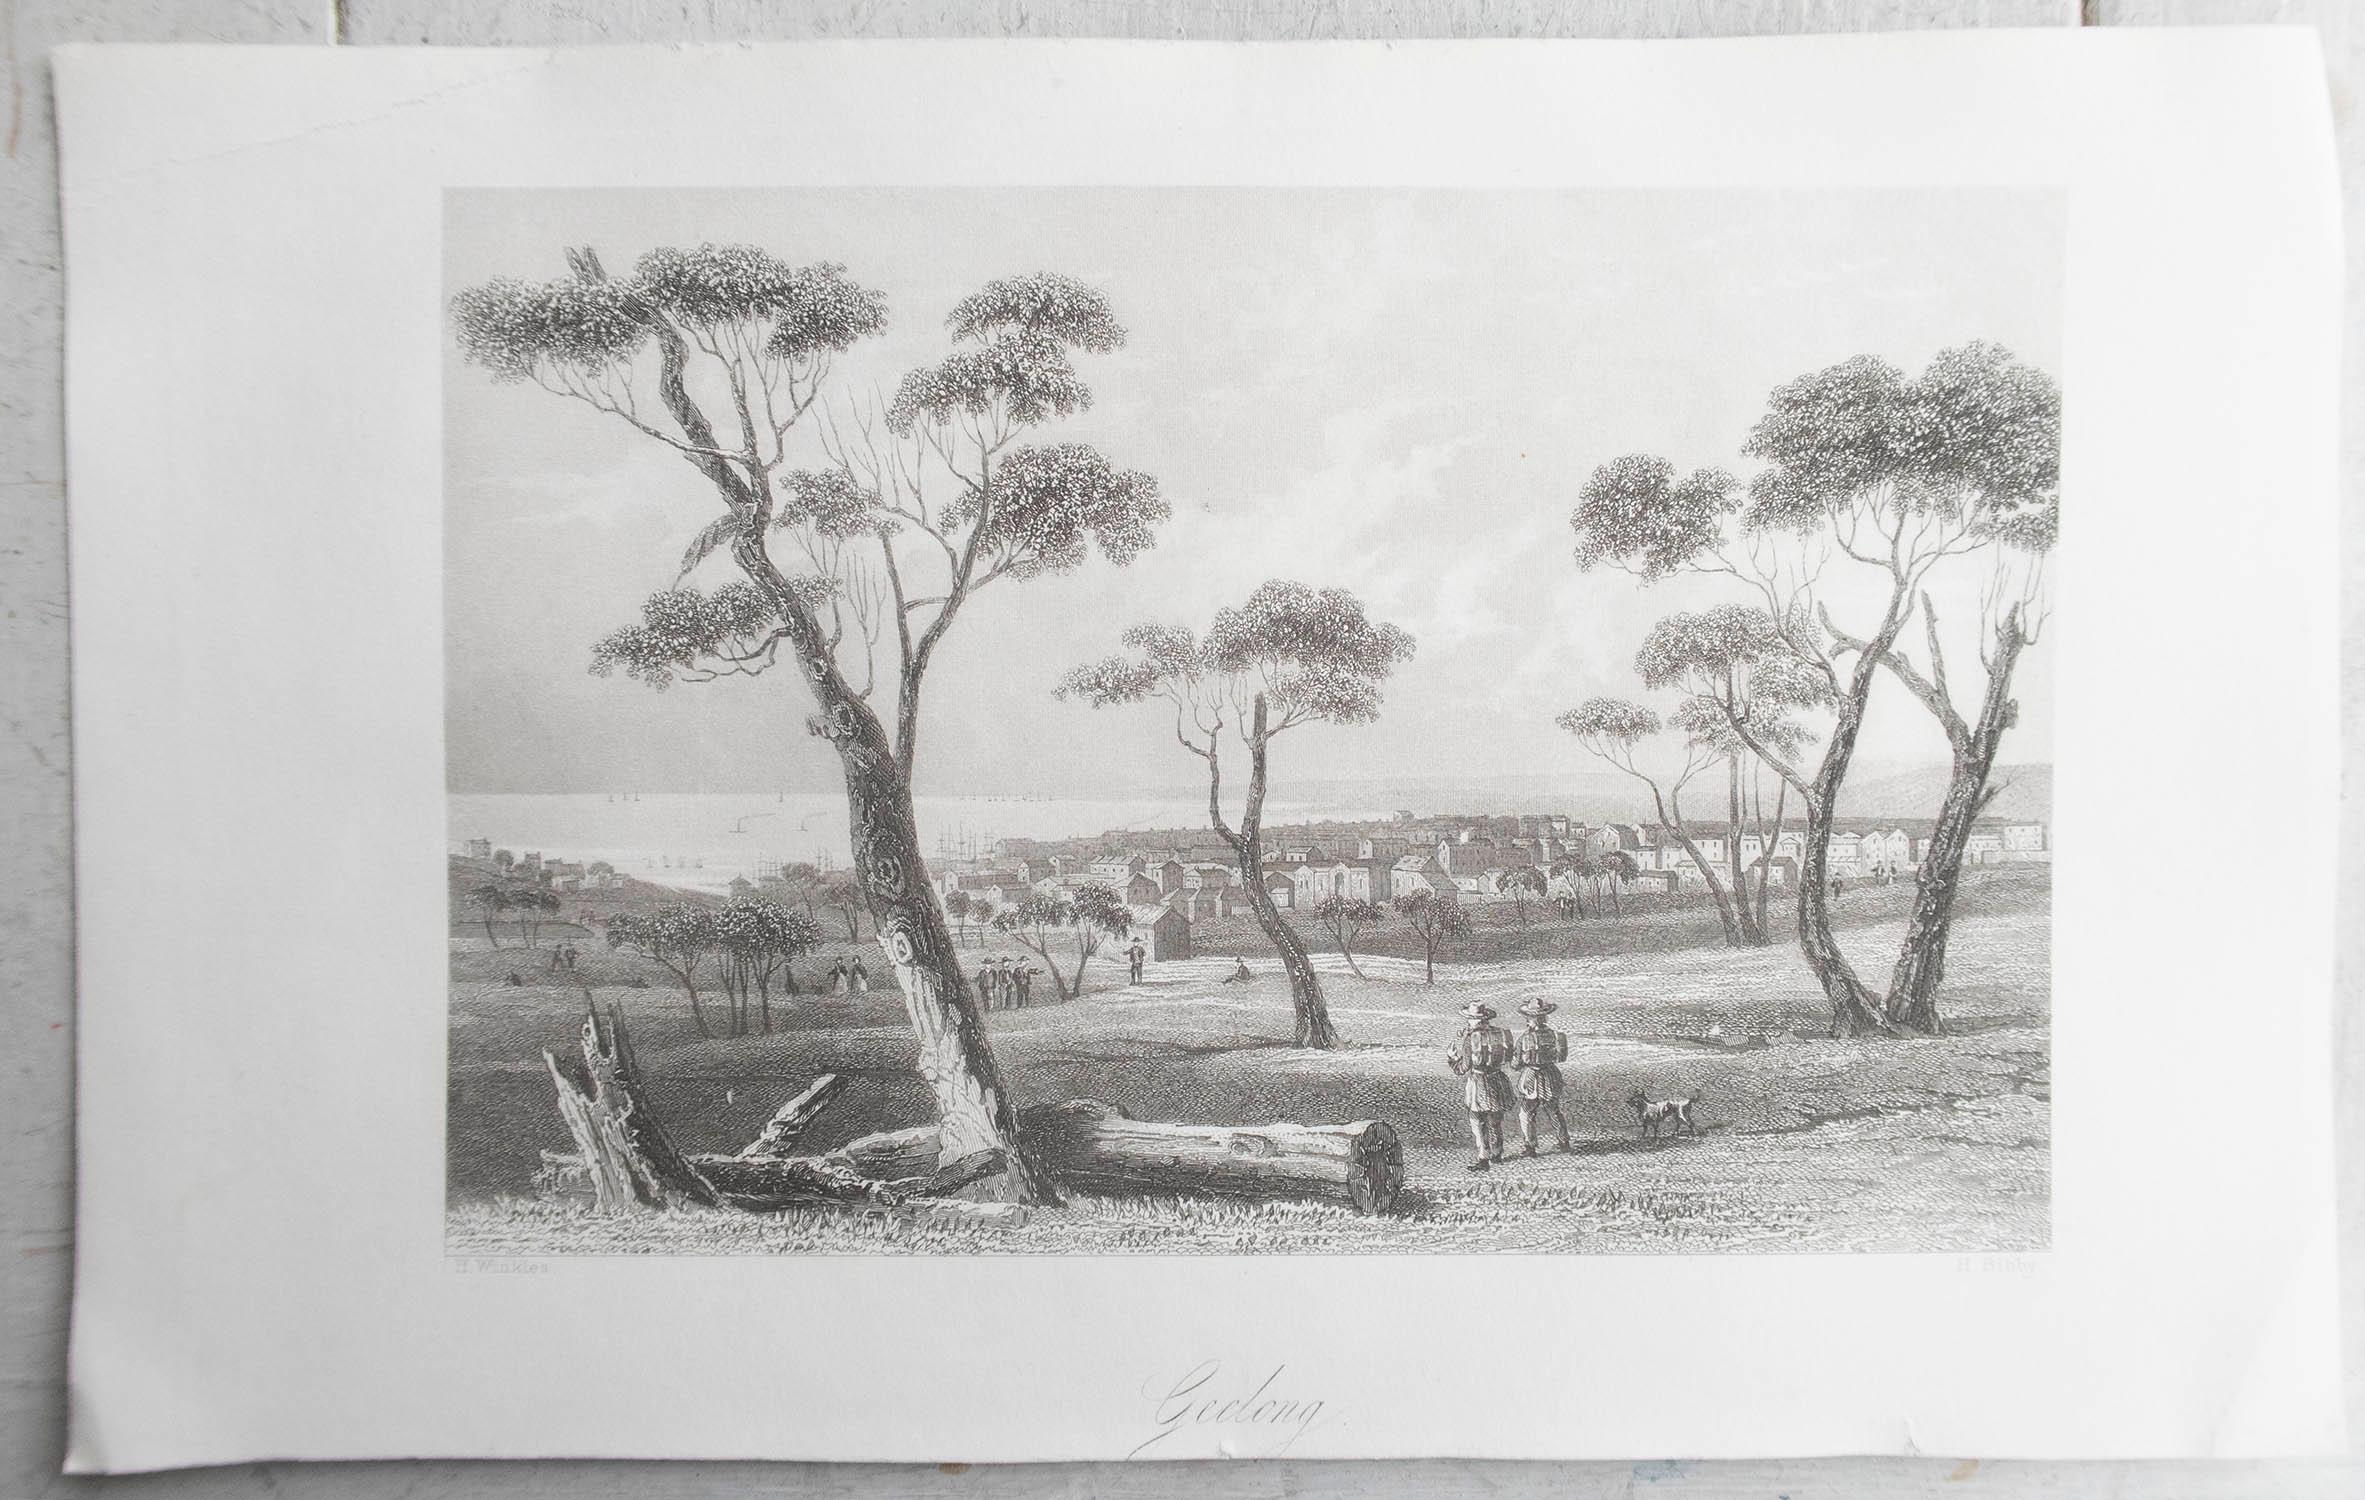 Other Original Antique Print of Geelong, Australia, circa 1850